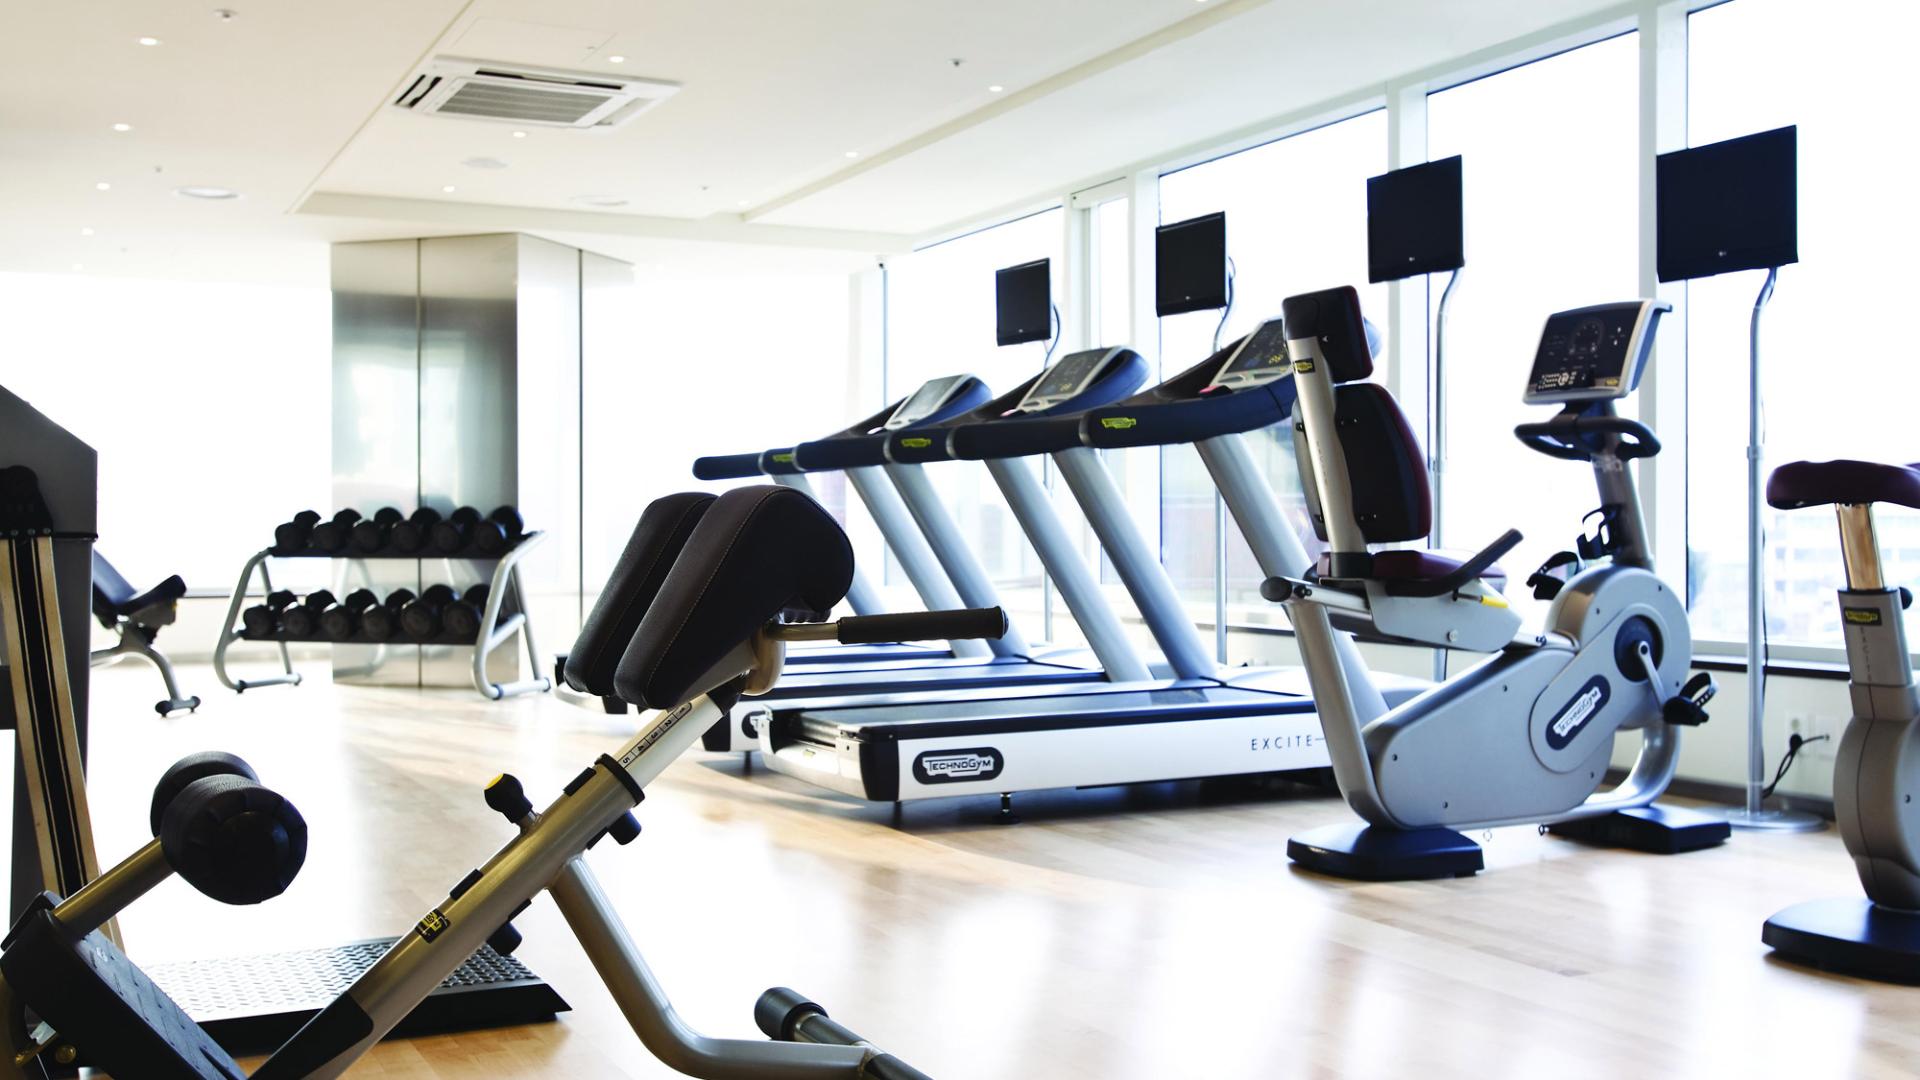 Lotte City Hotel Mapo - Facilities - Spa & Fitness - Hotel Fitness